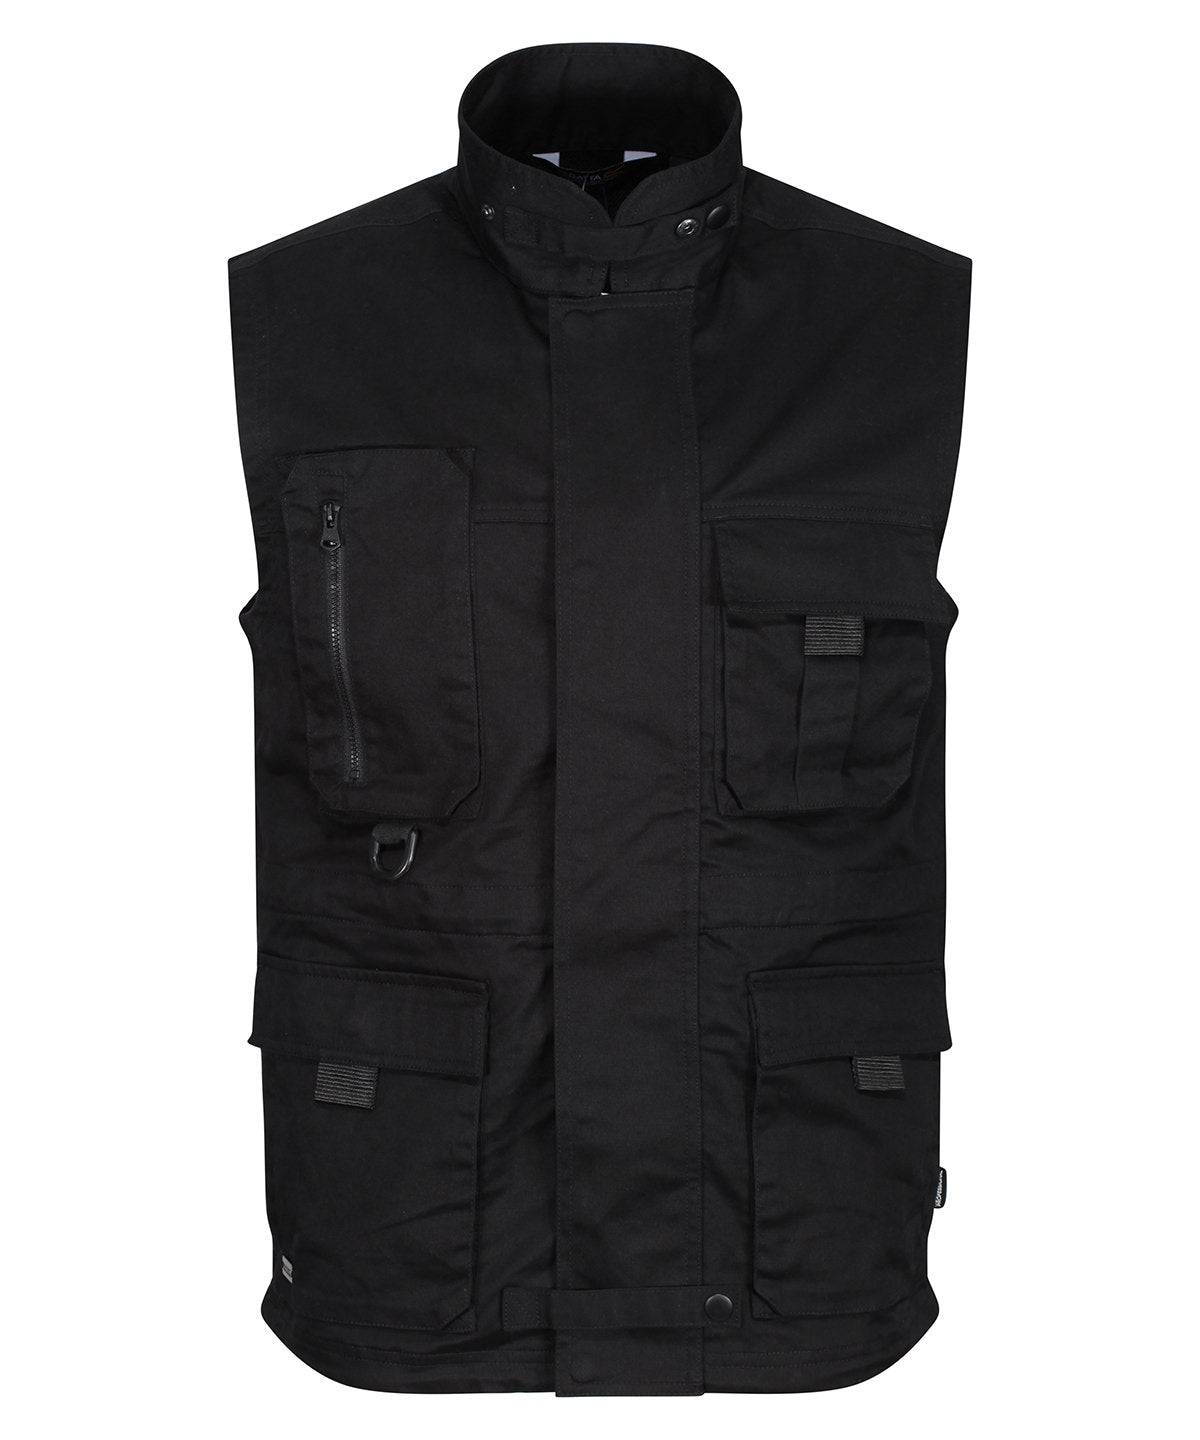 Black - Pro utility vest